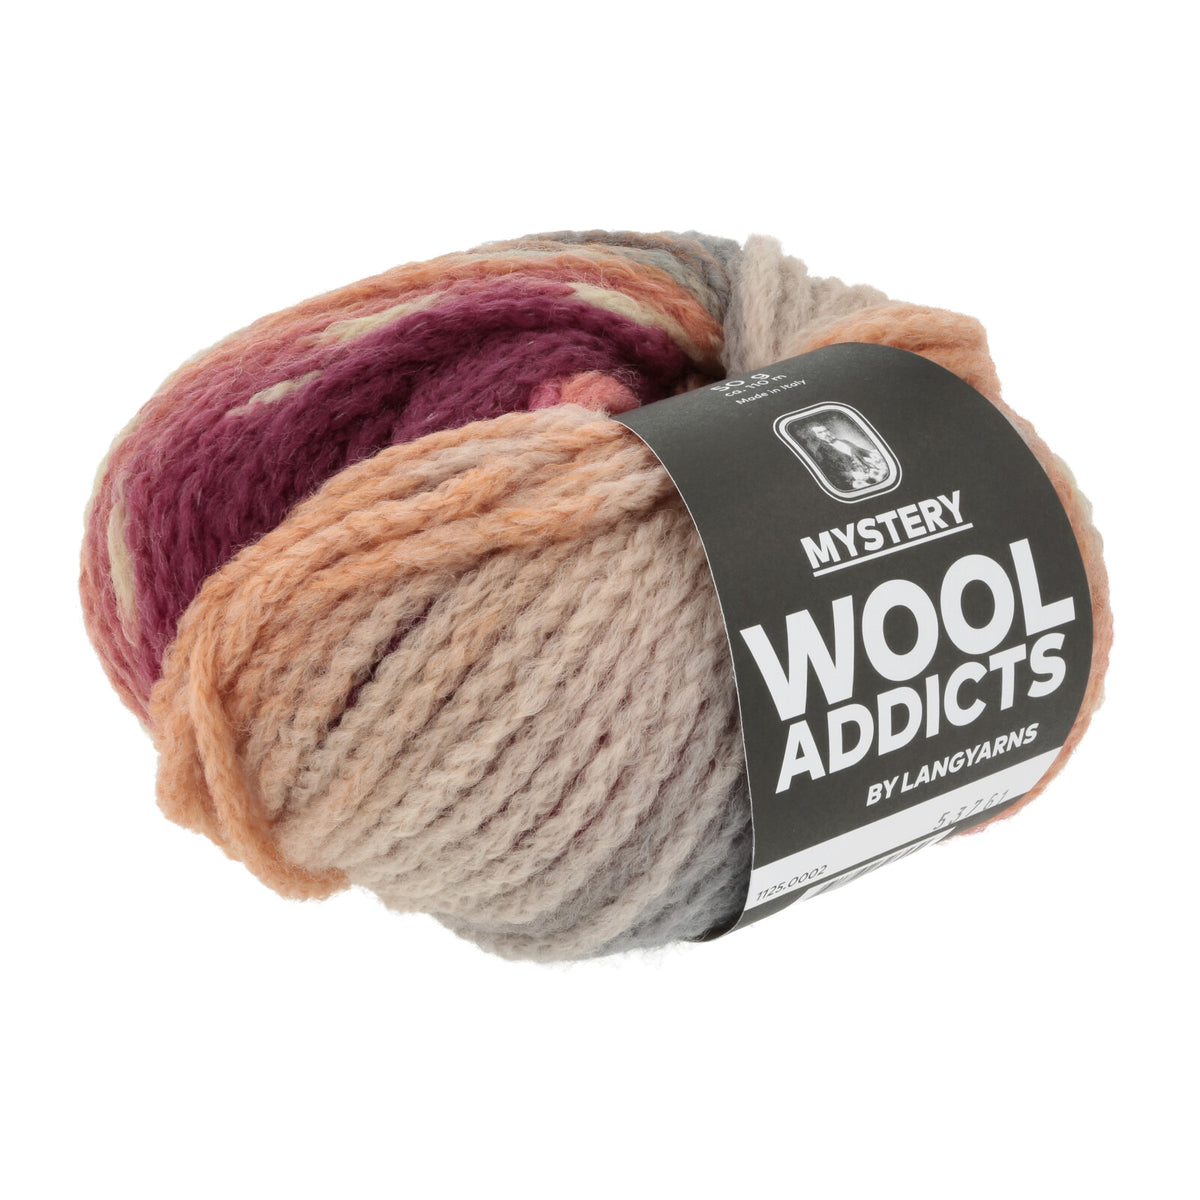 Wool Addicts Mystery